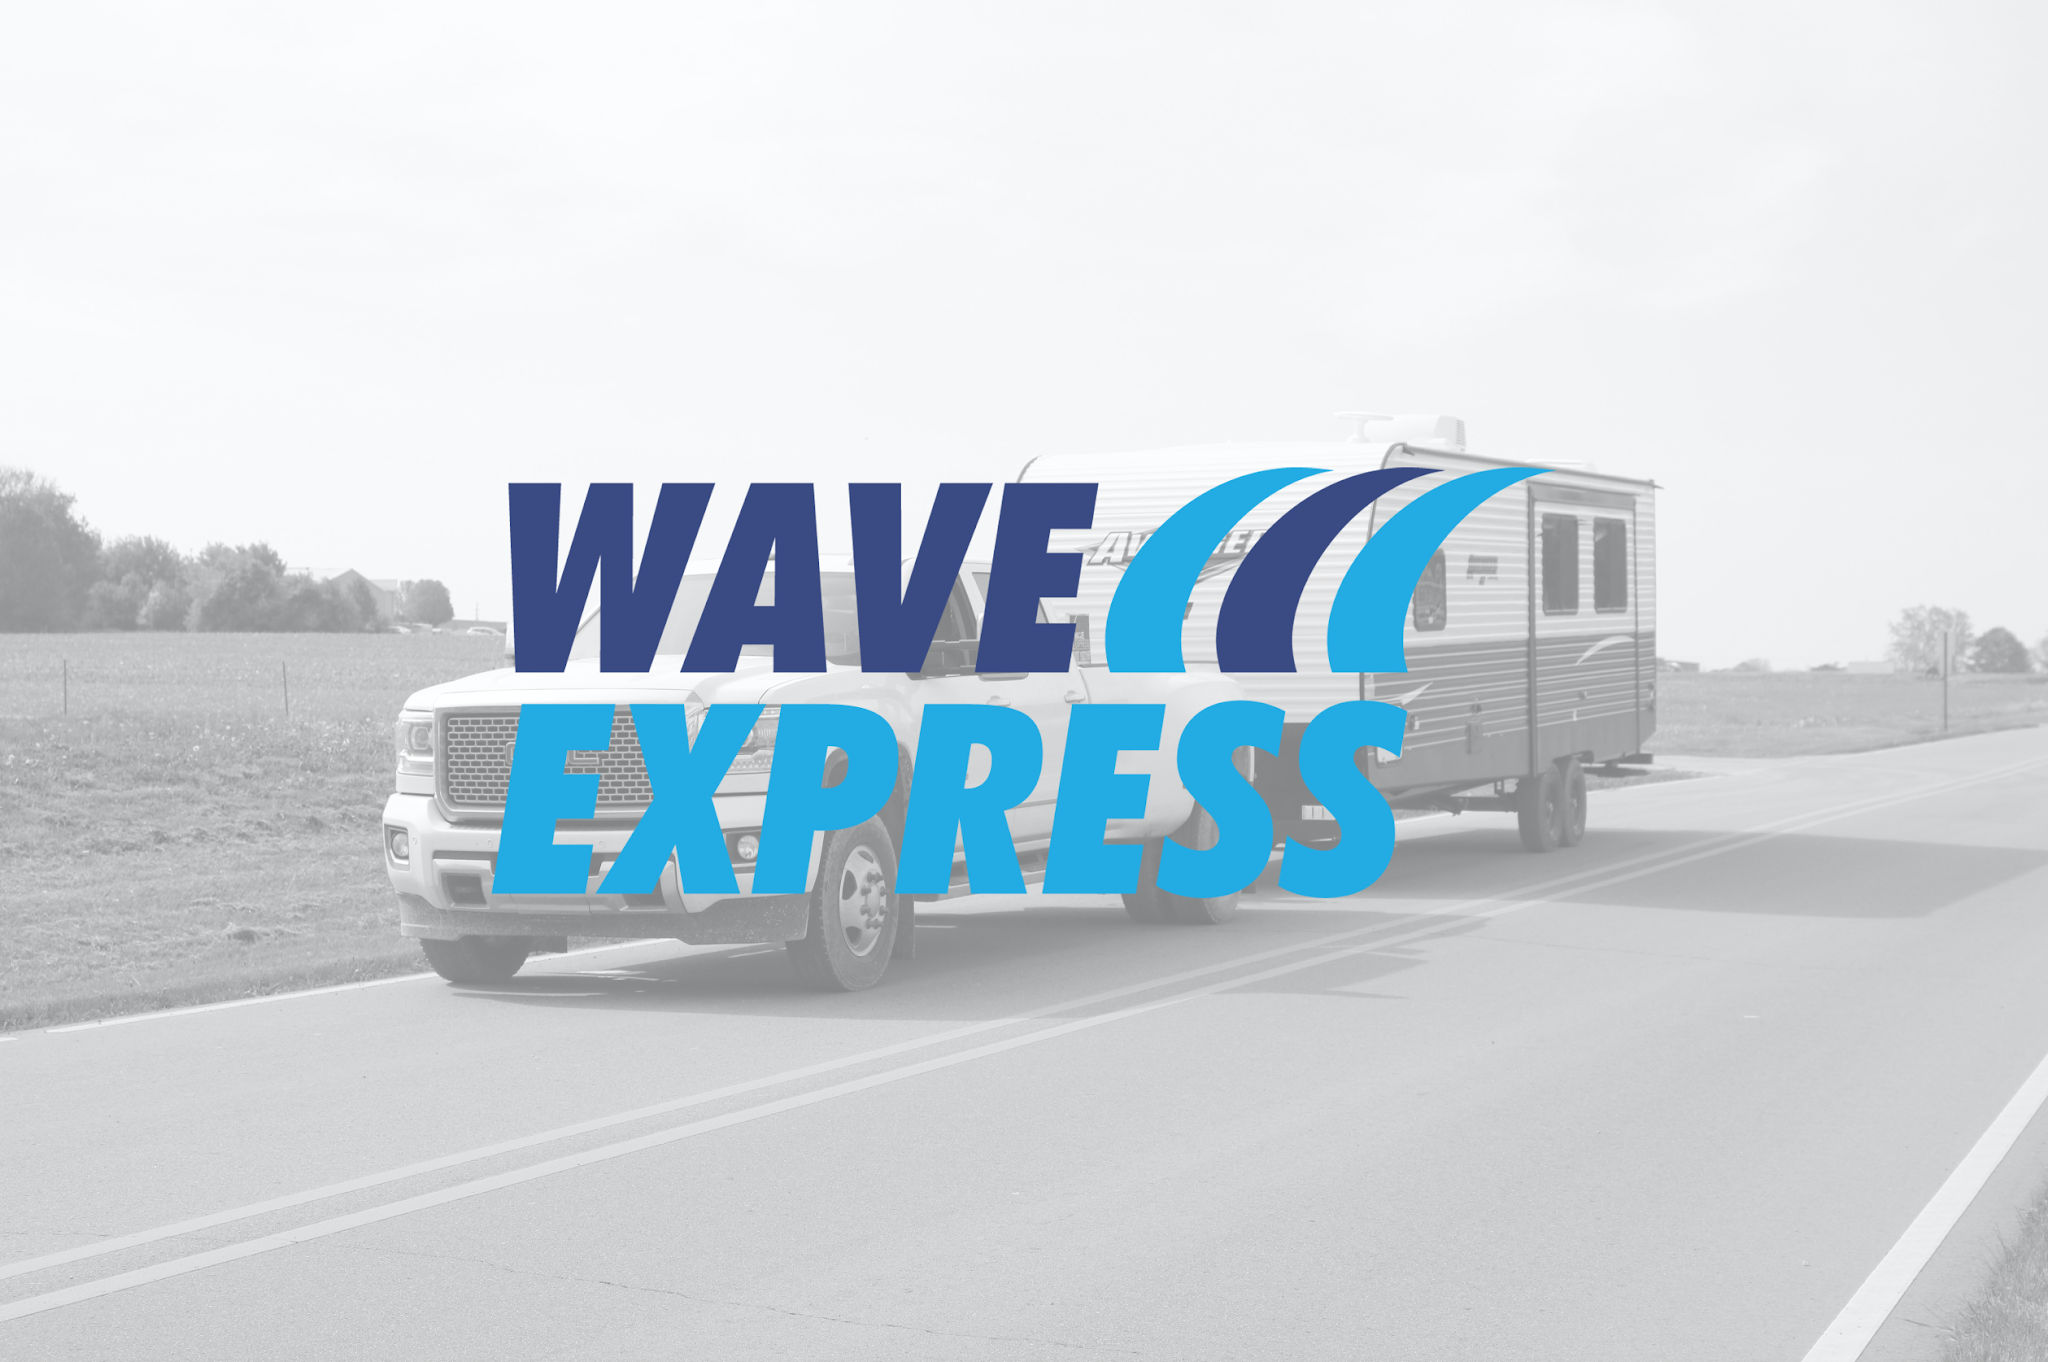 Wave Express